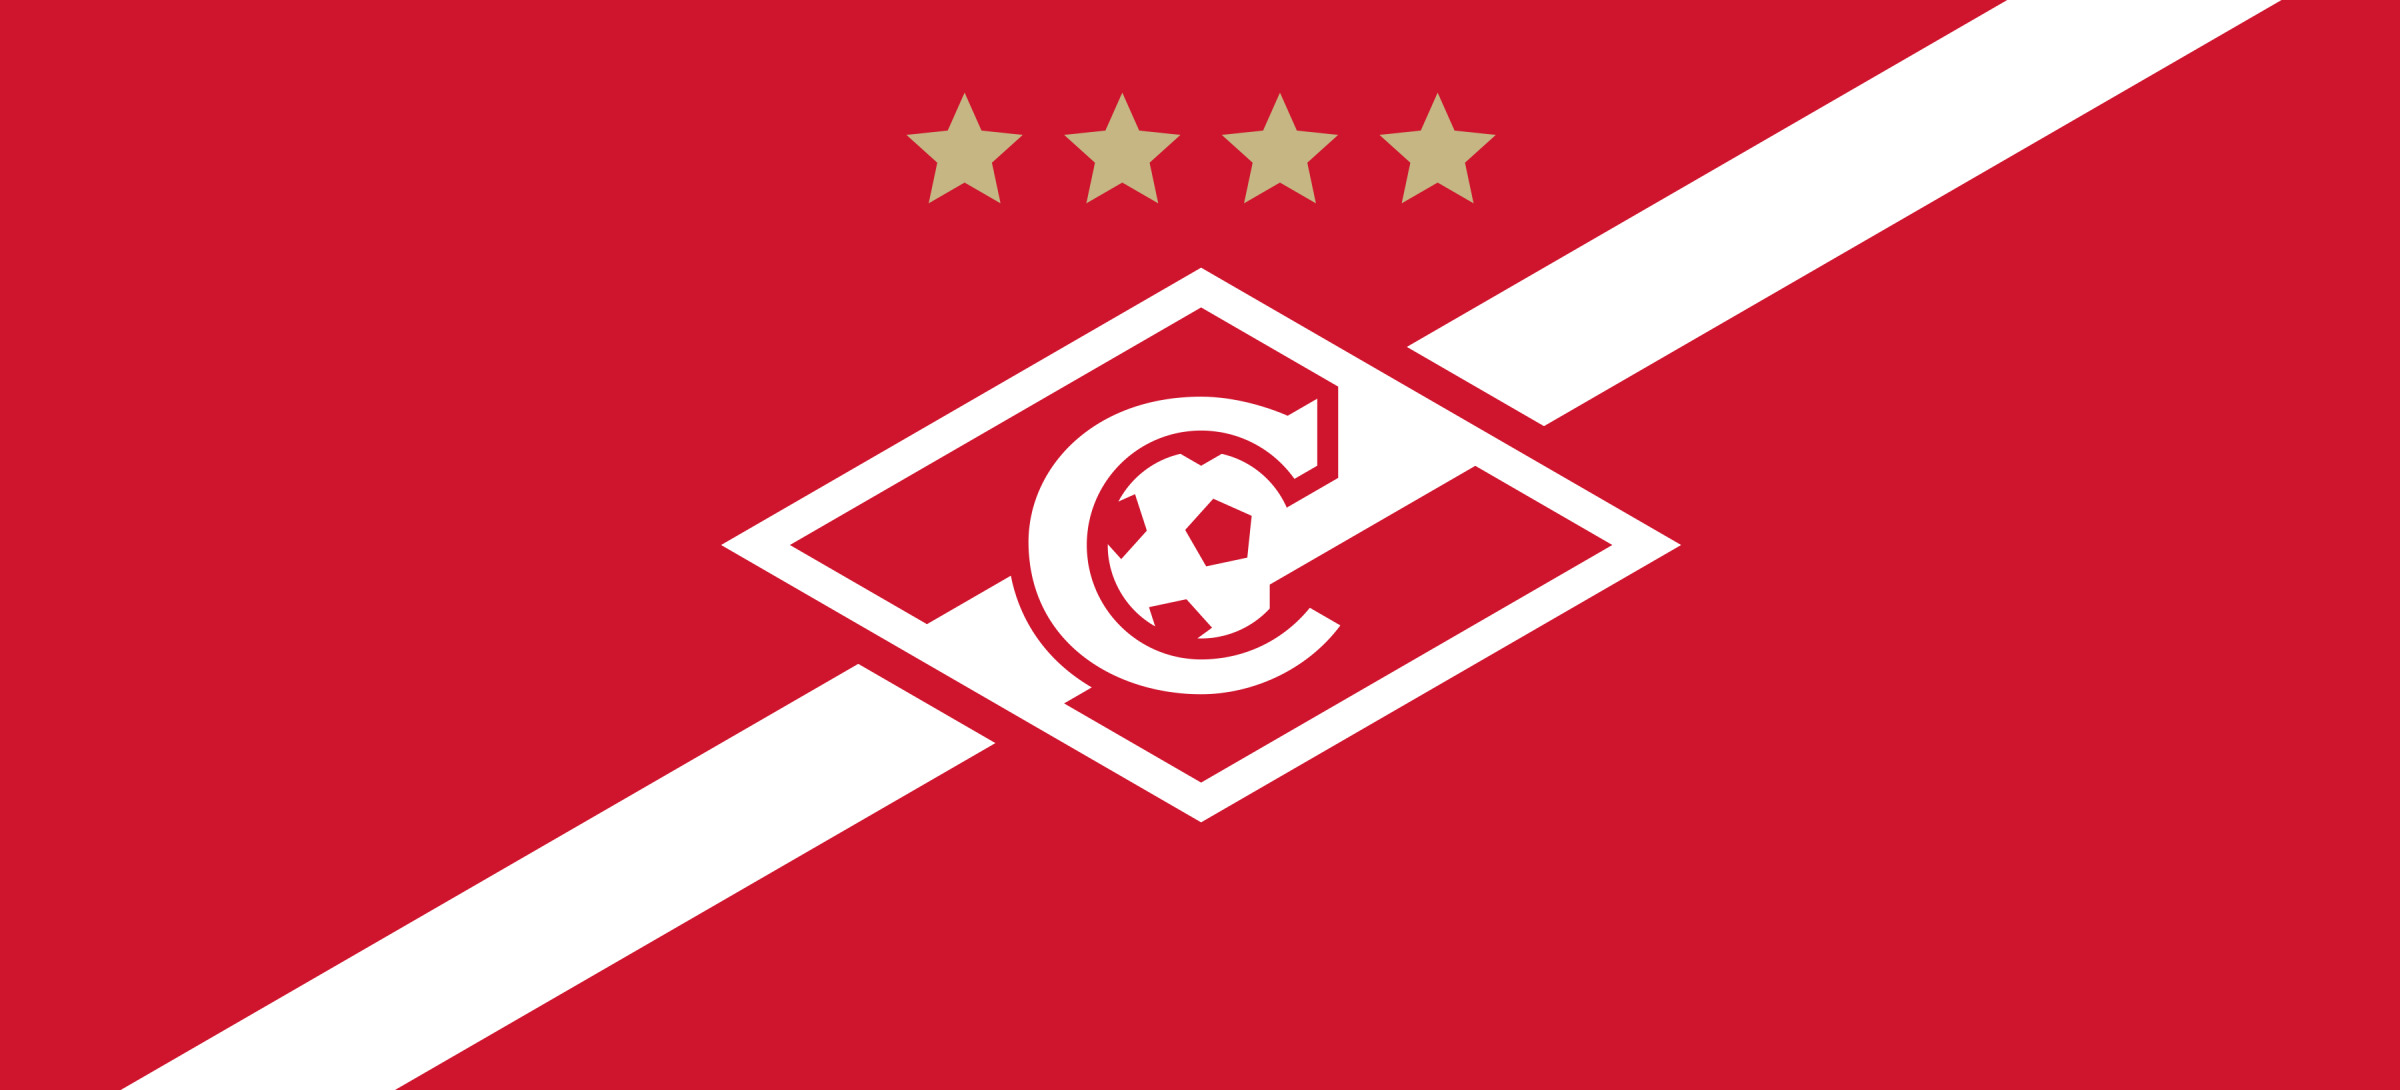 fc-spartak-moscow-18-football-club-facts